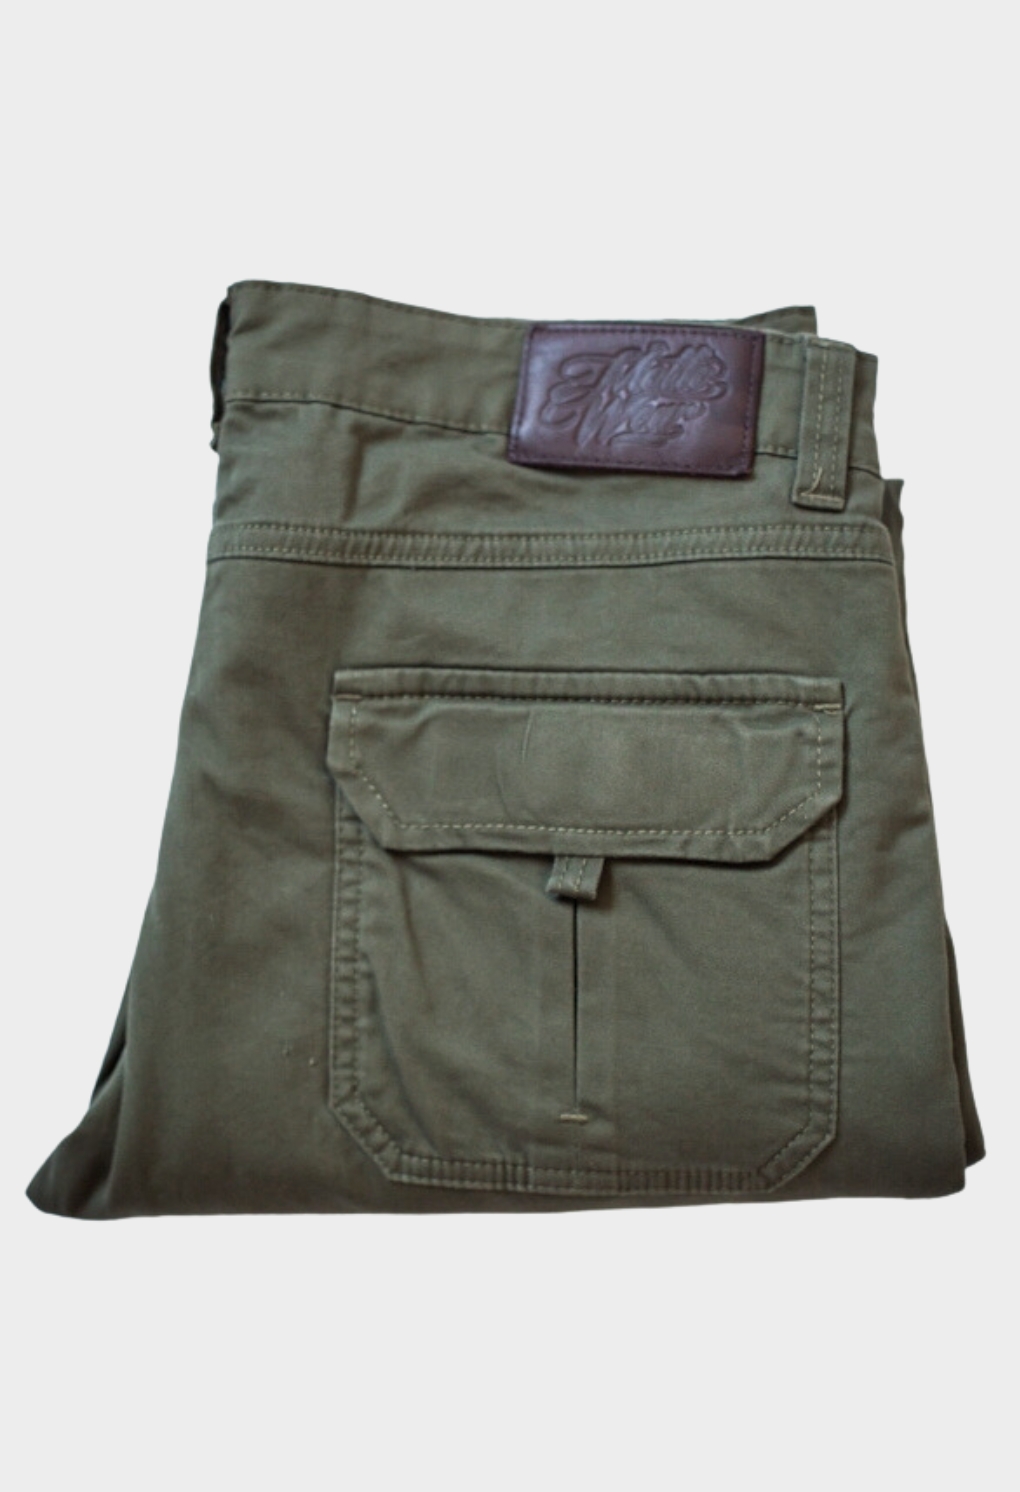 Men's Outdoor Pants - All In Motion™ Green Xxl : Target